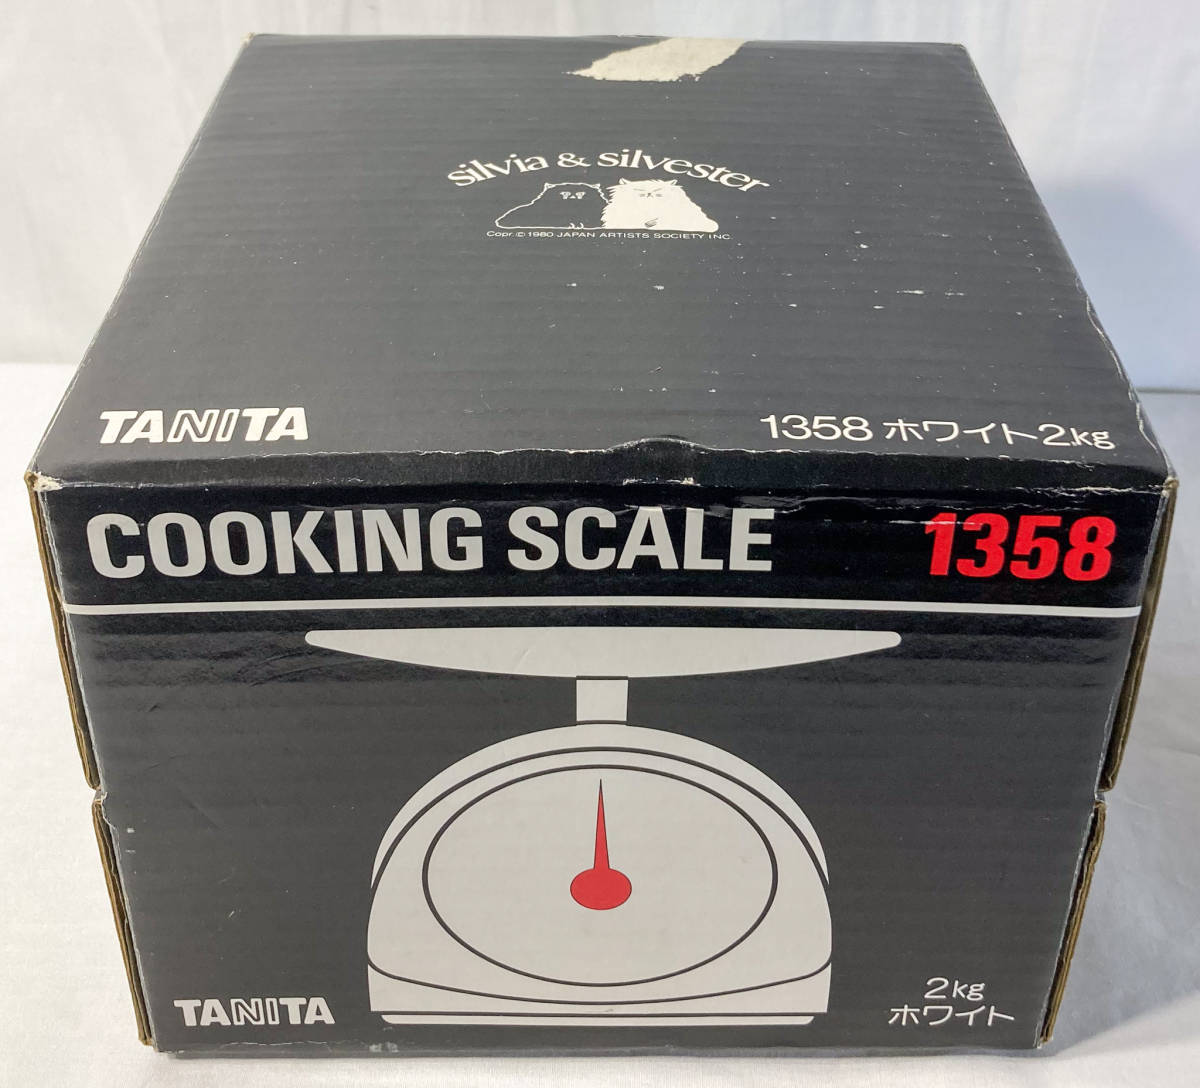  Silvia sill Bester measuring tanitaTANITA 2KG cooking scale general merchandise measuring device kitchen interior [k923.15]